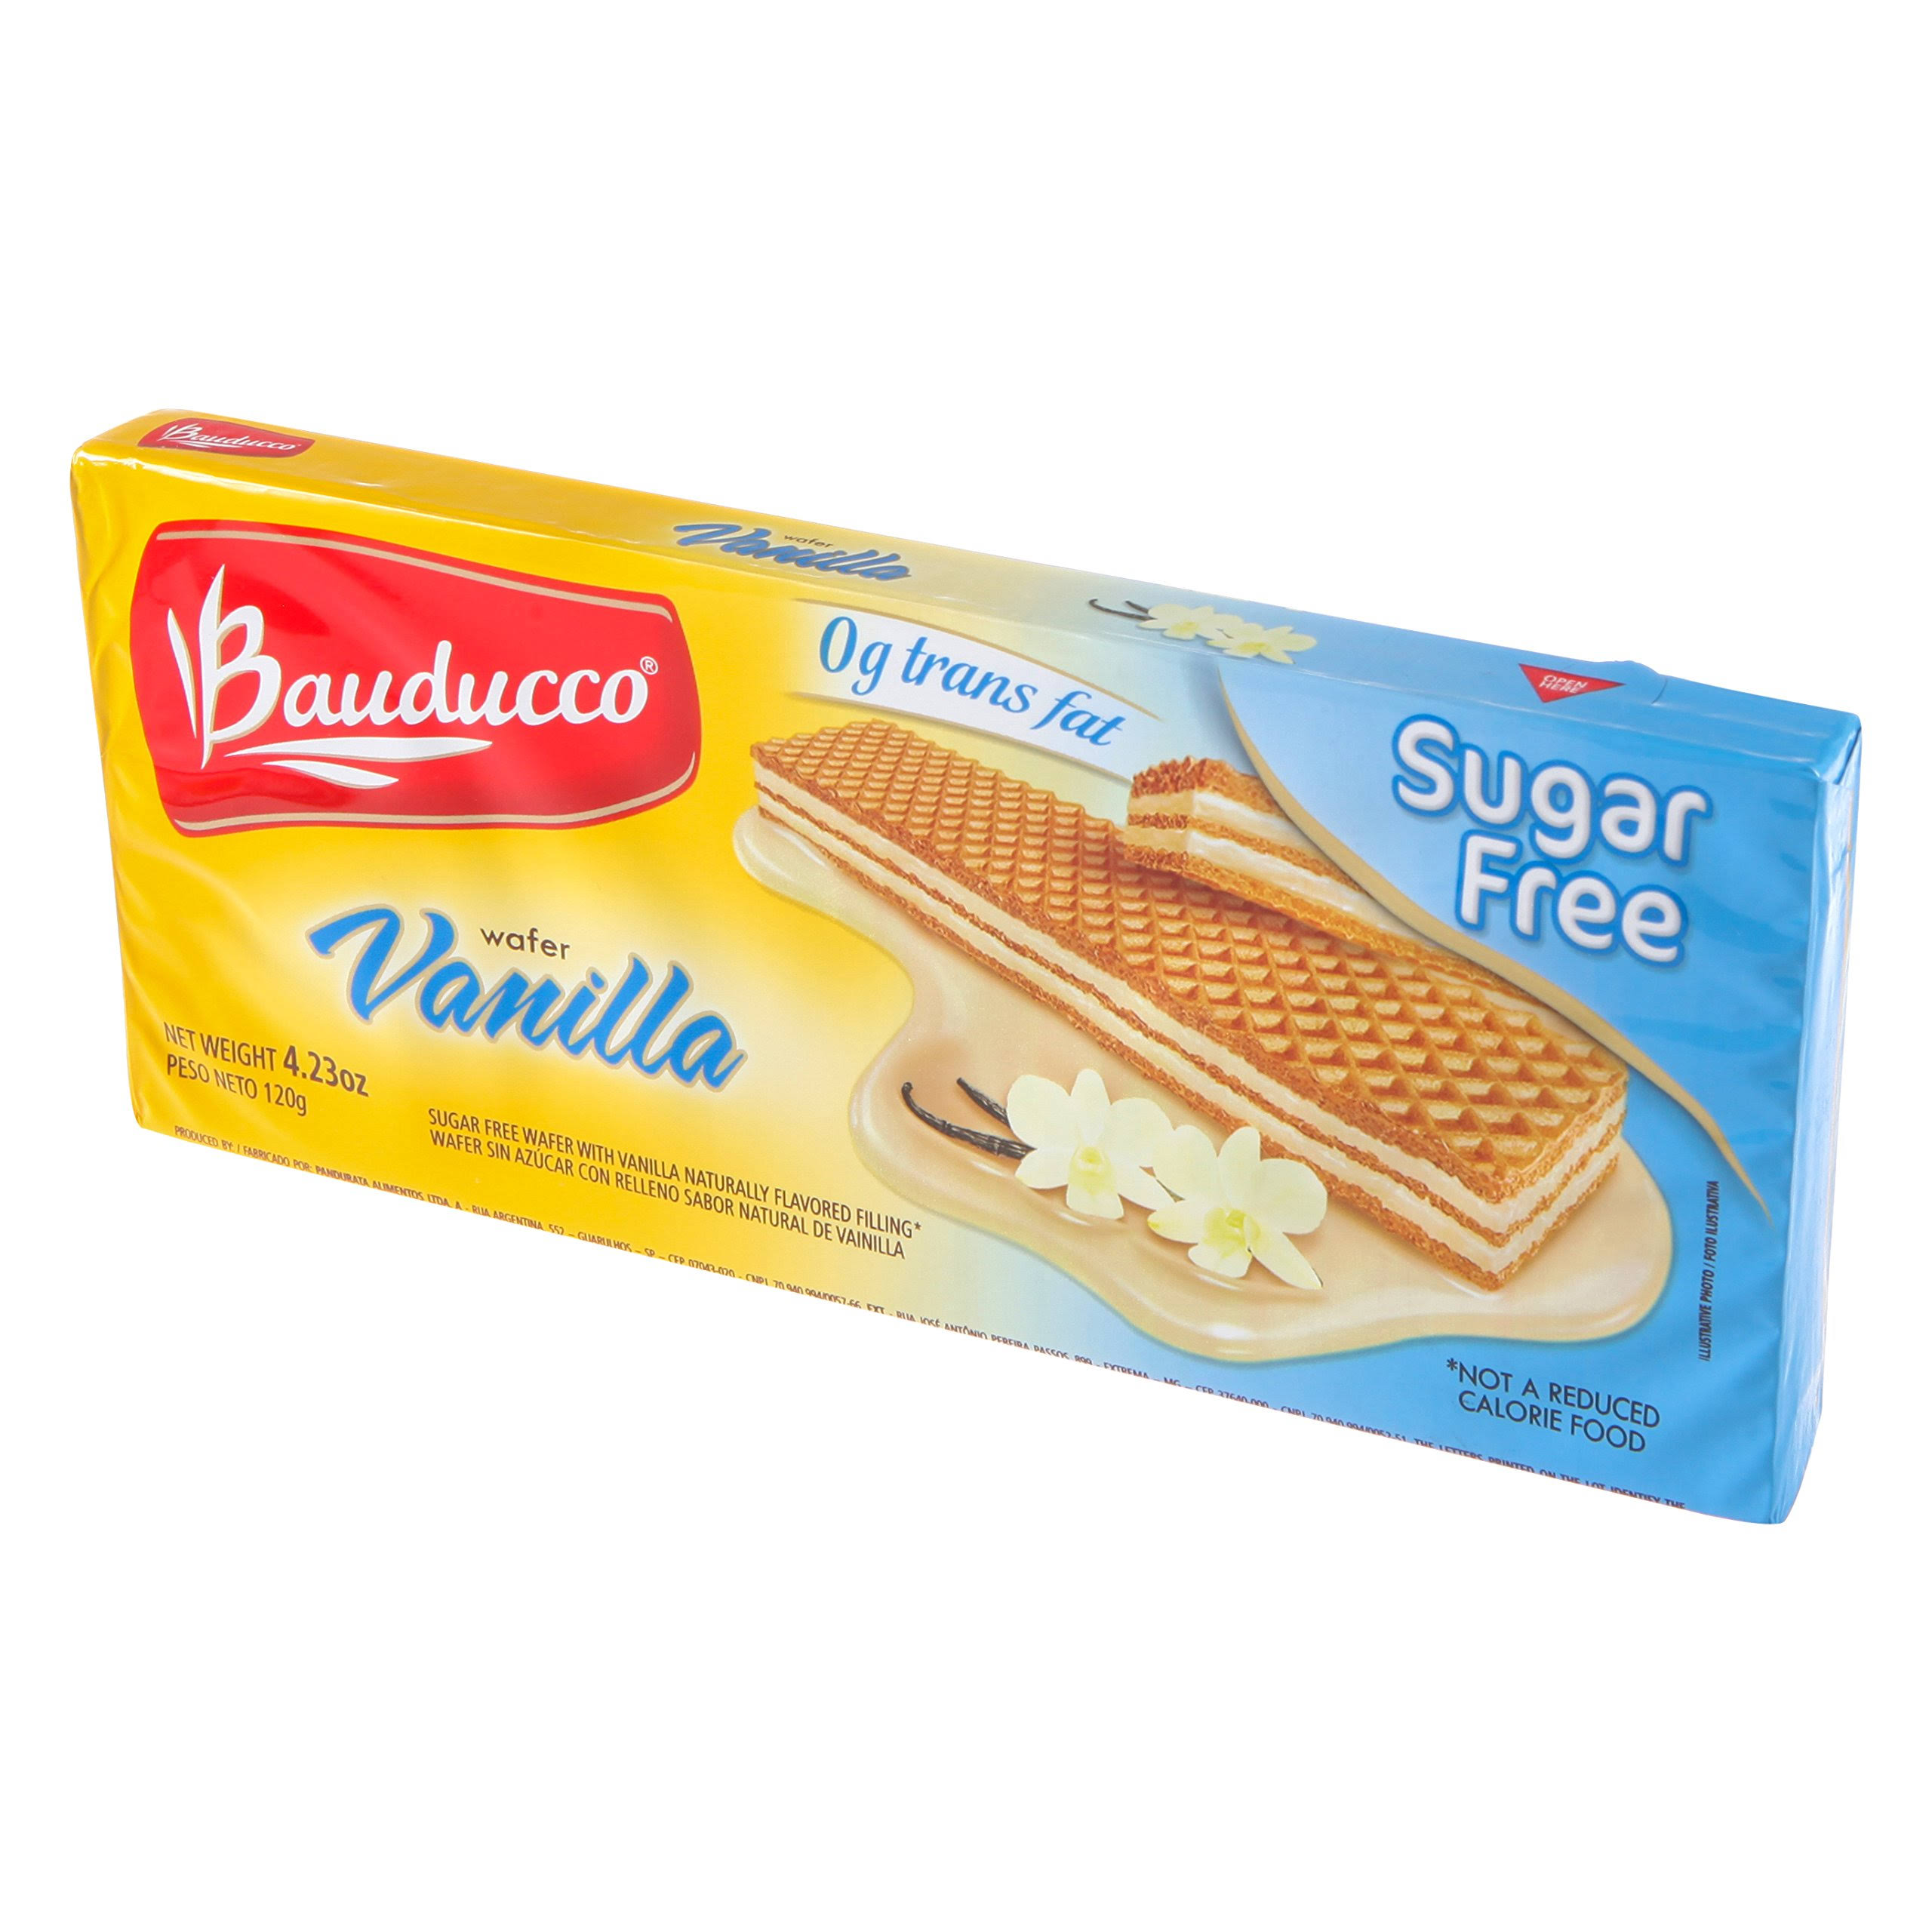 Bauducco Wafer, Sugar Free, Vanilla